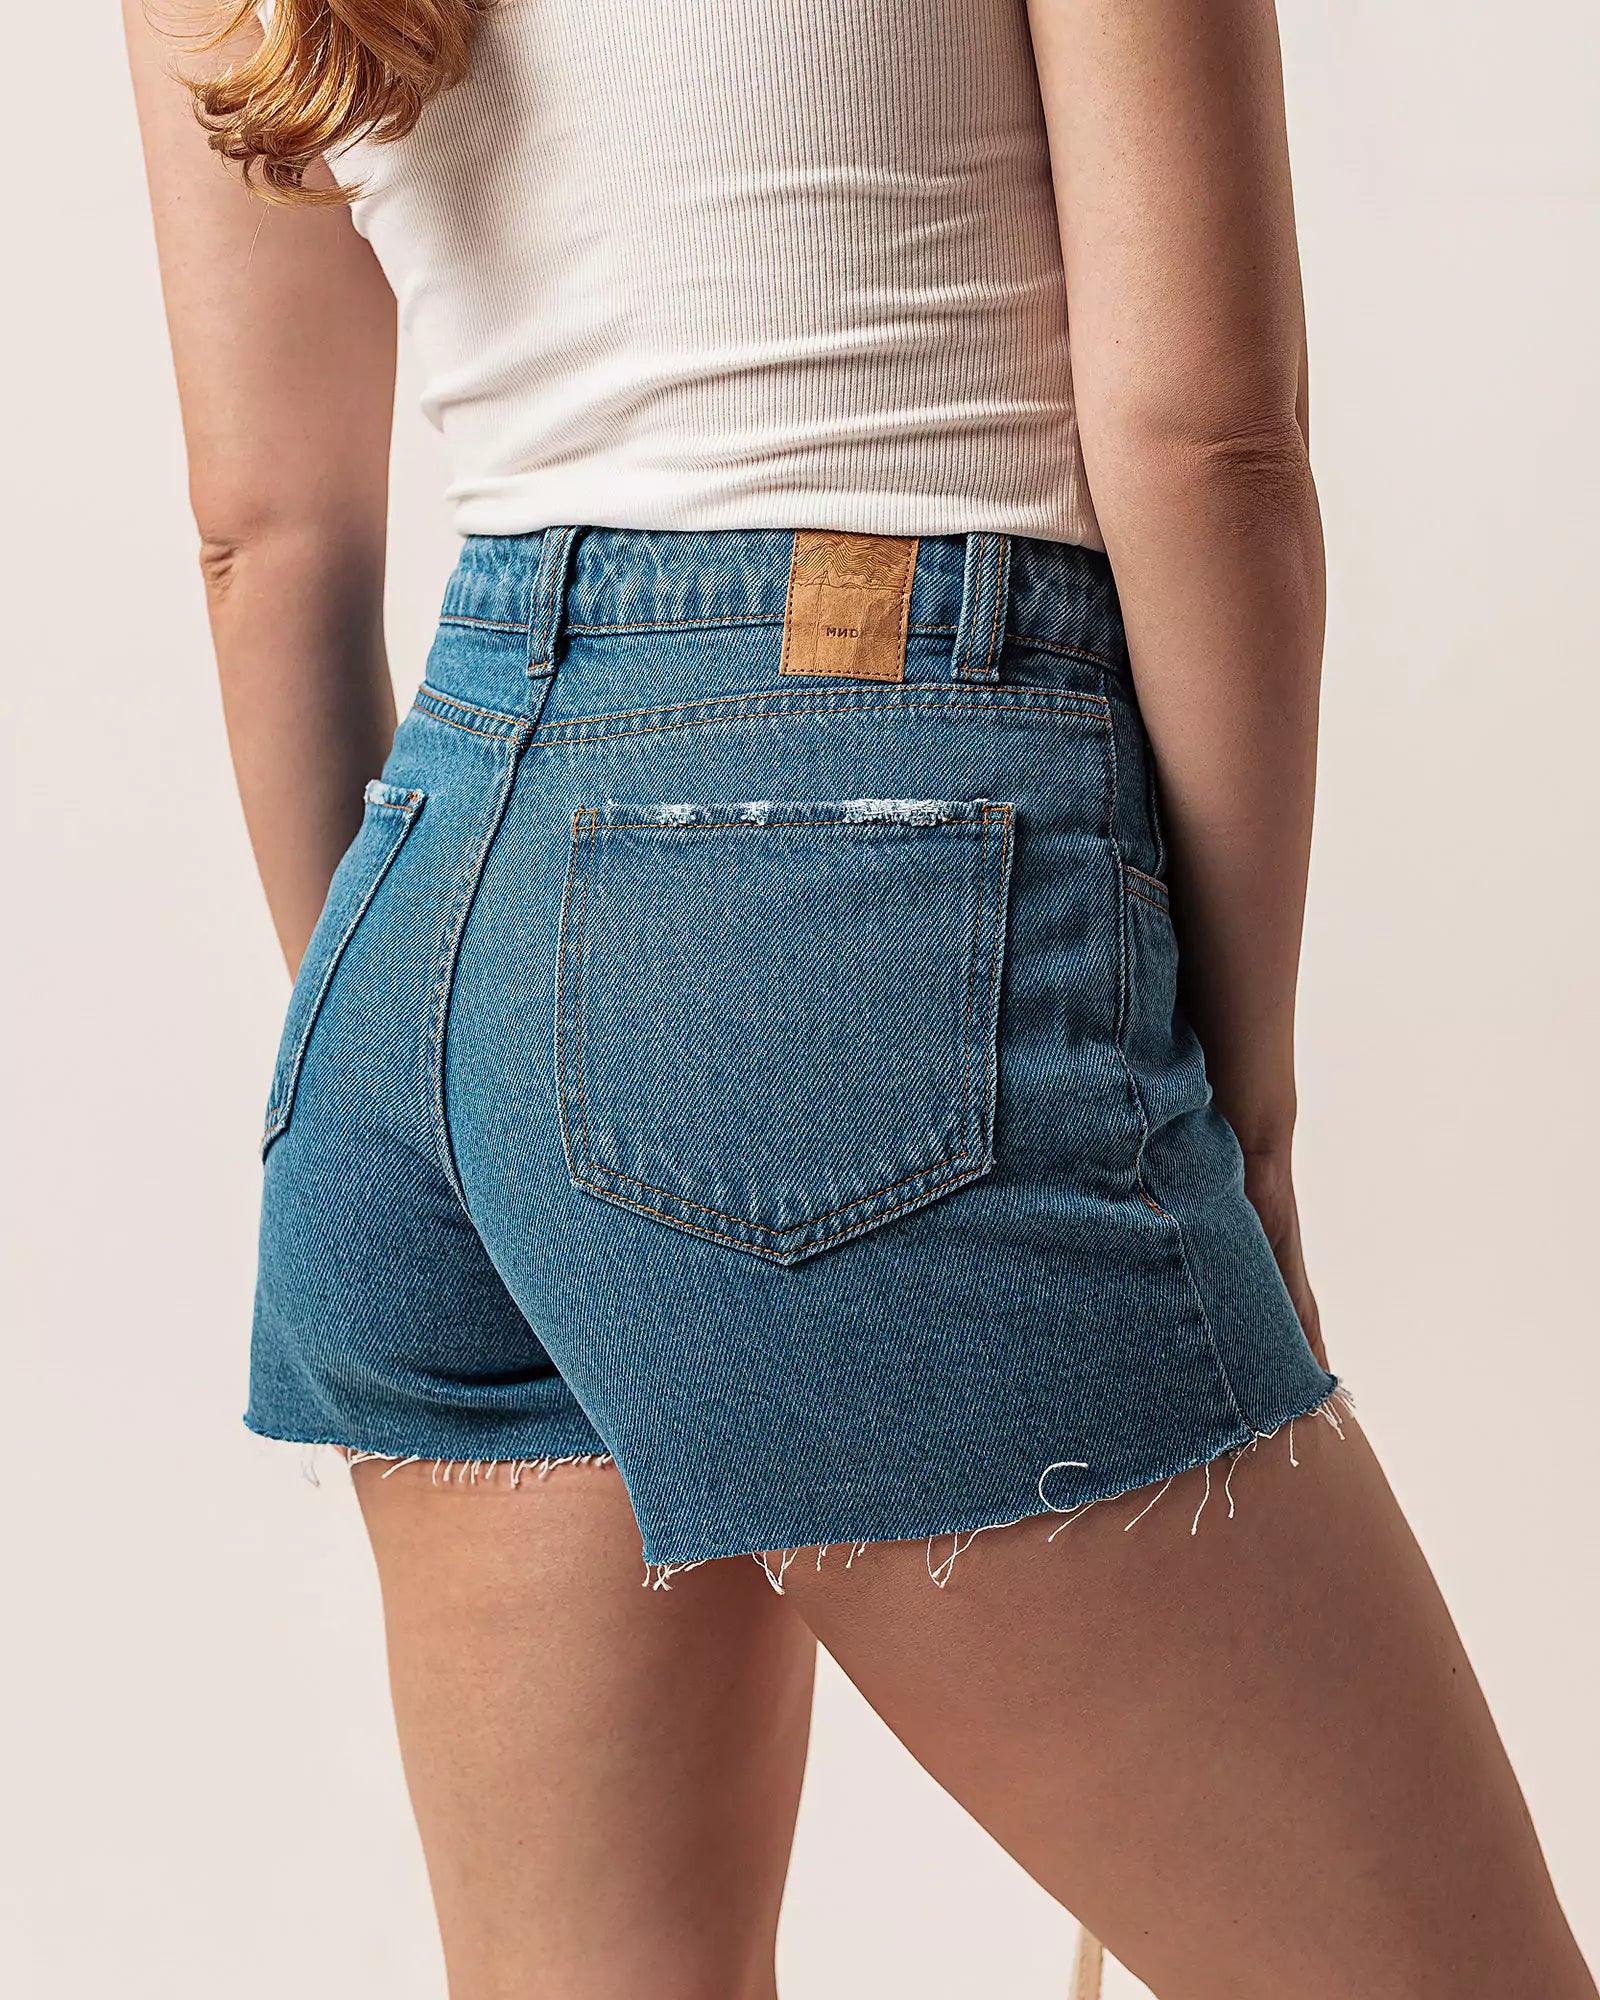 Short Jeans Curto - Marshoes  Loja de Roupas Femininas - Moda